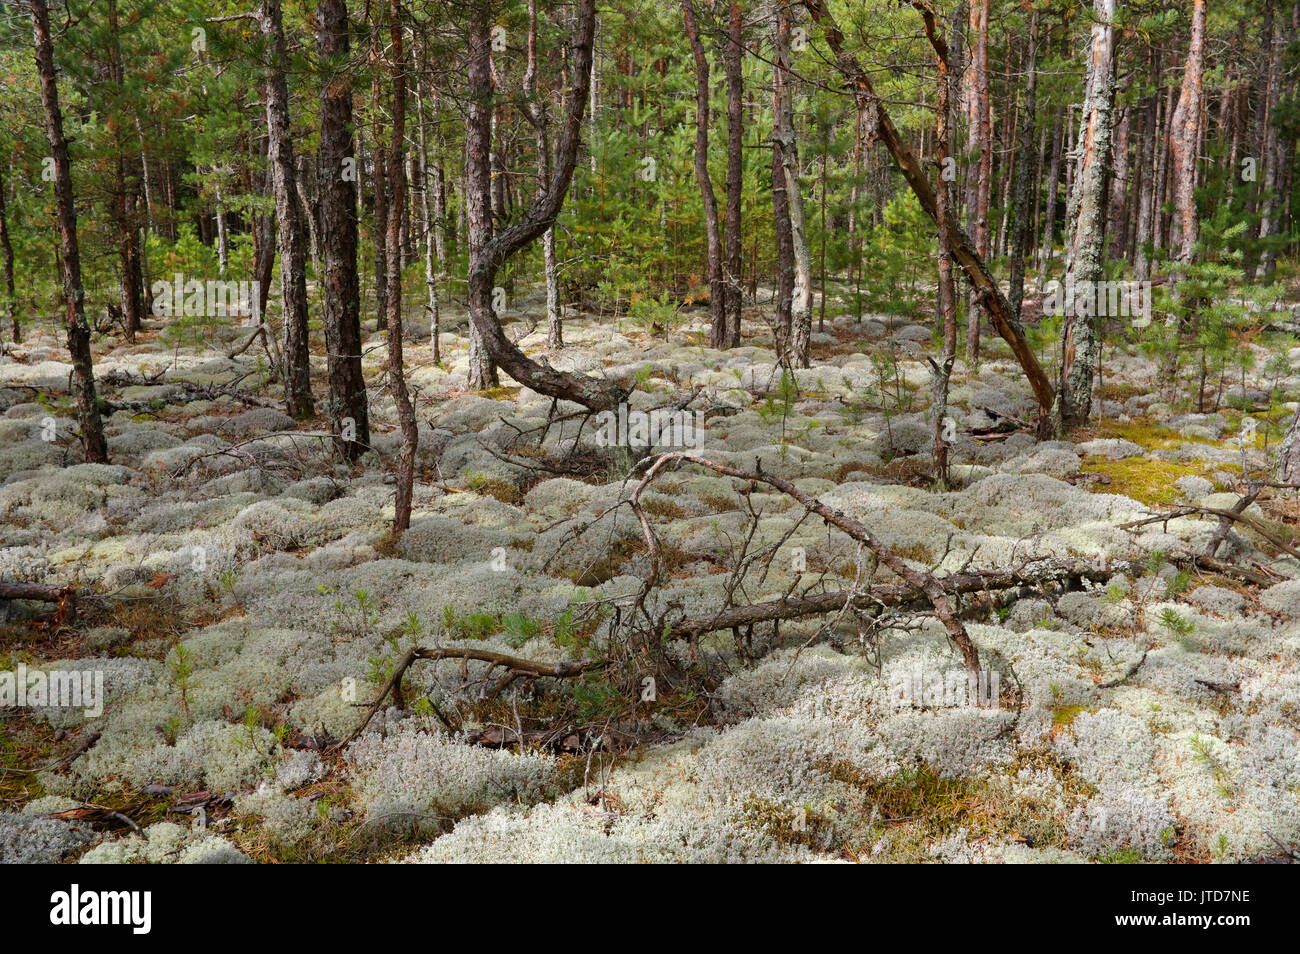 Kihnu Island Pine Forest. Estonia. 5th August 2017 Stock Photo